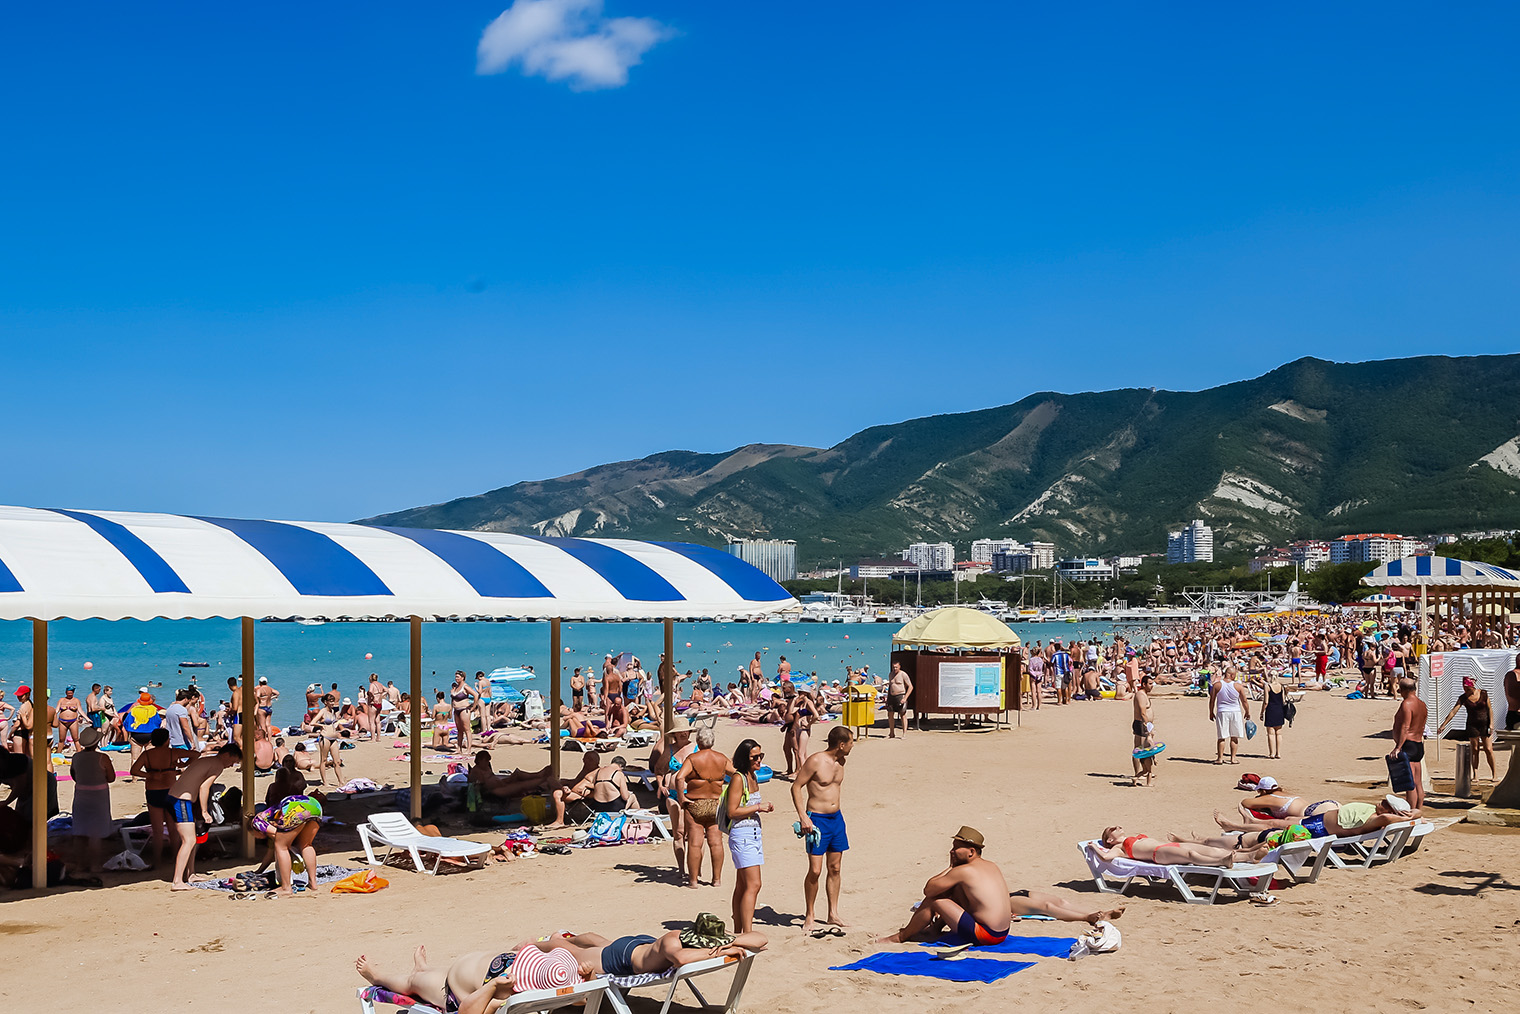 В августе трудно найти свободное место на пляже у самого моря. Фотография: nikolpetr / Shutterstock